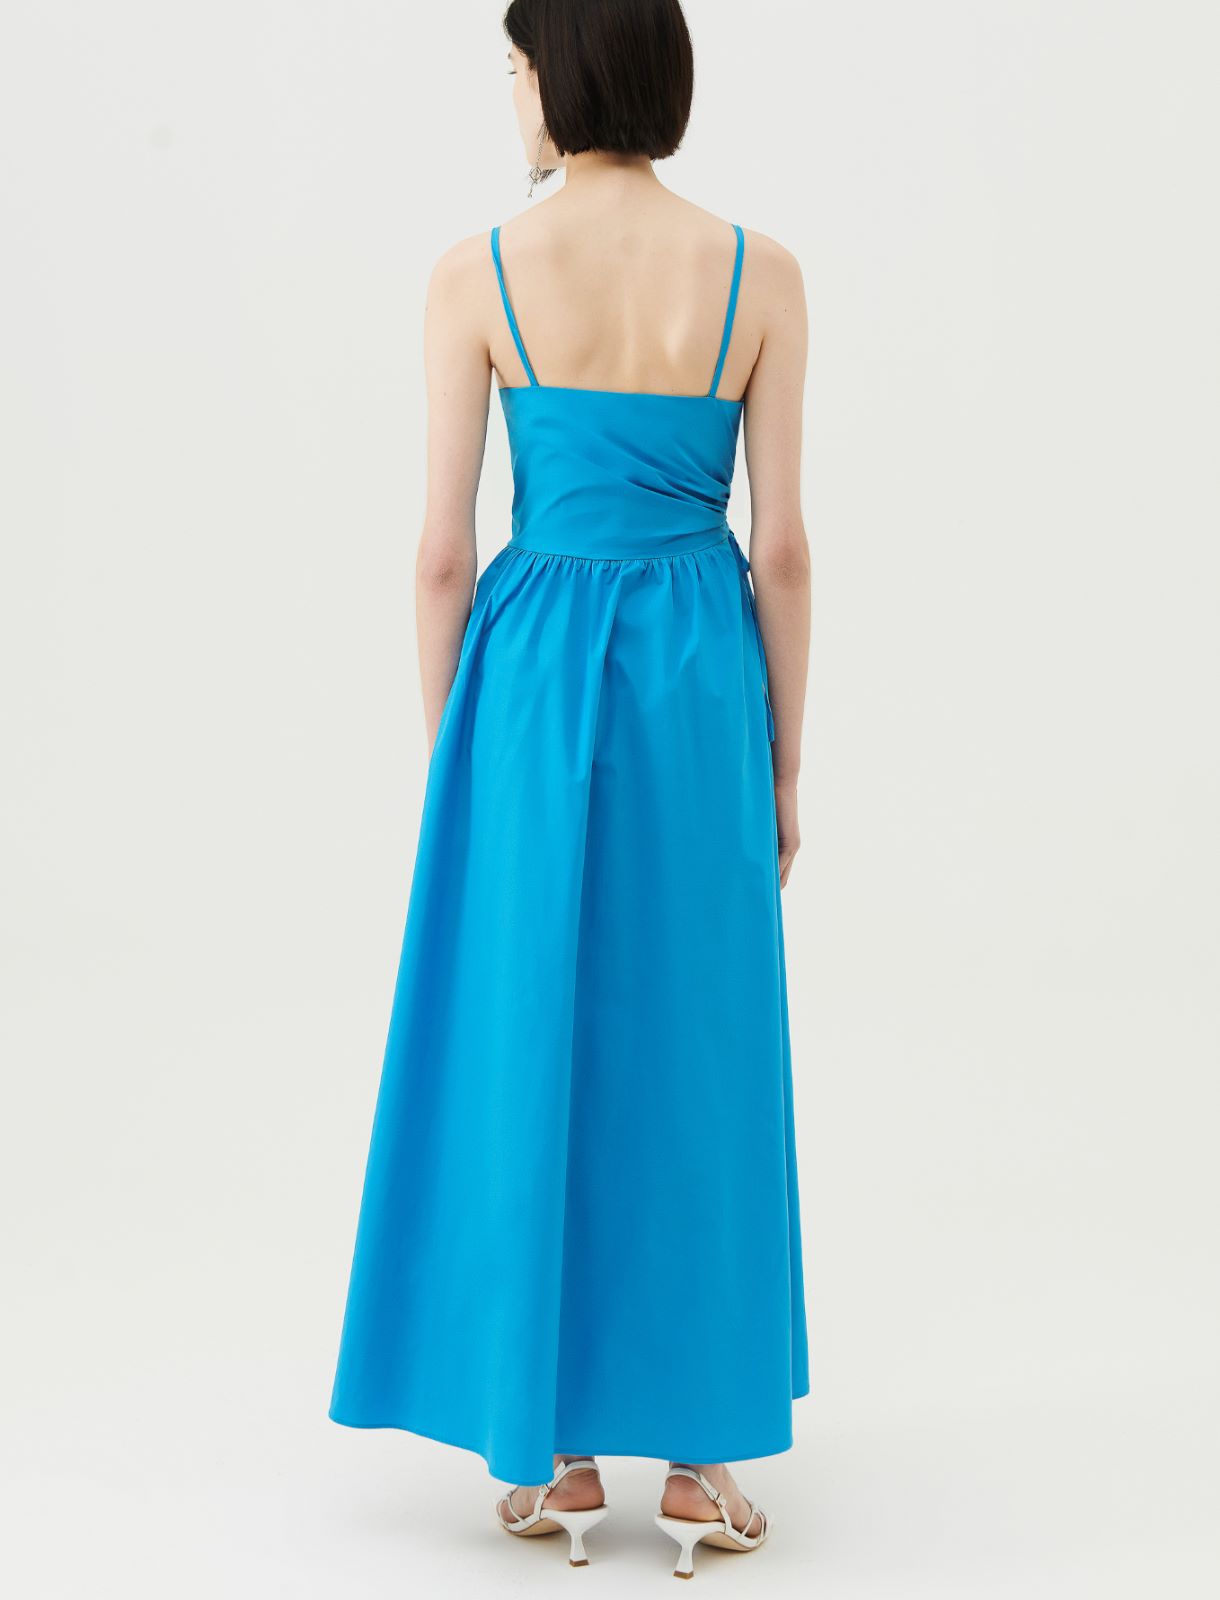 Poplin dress - Turquoise - Marella - 3